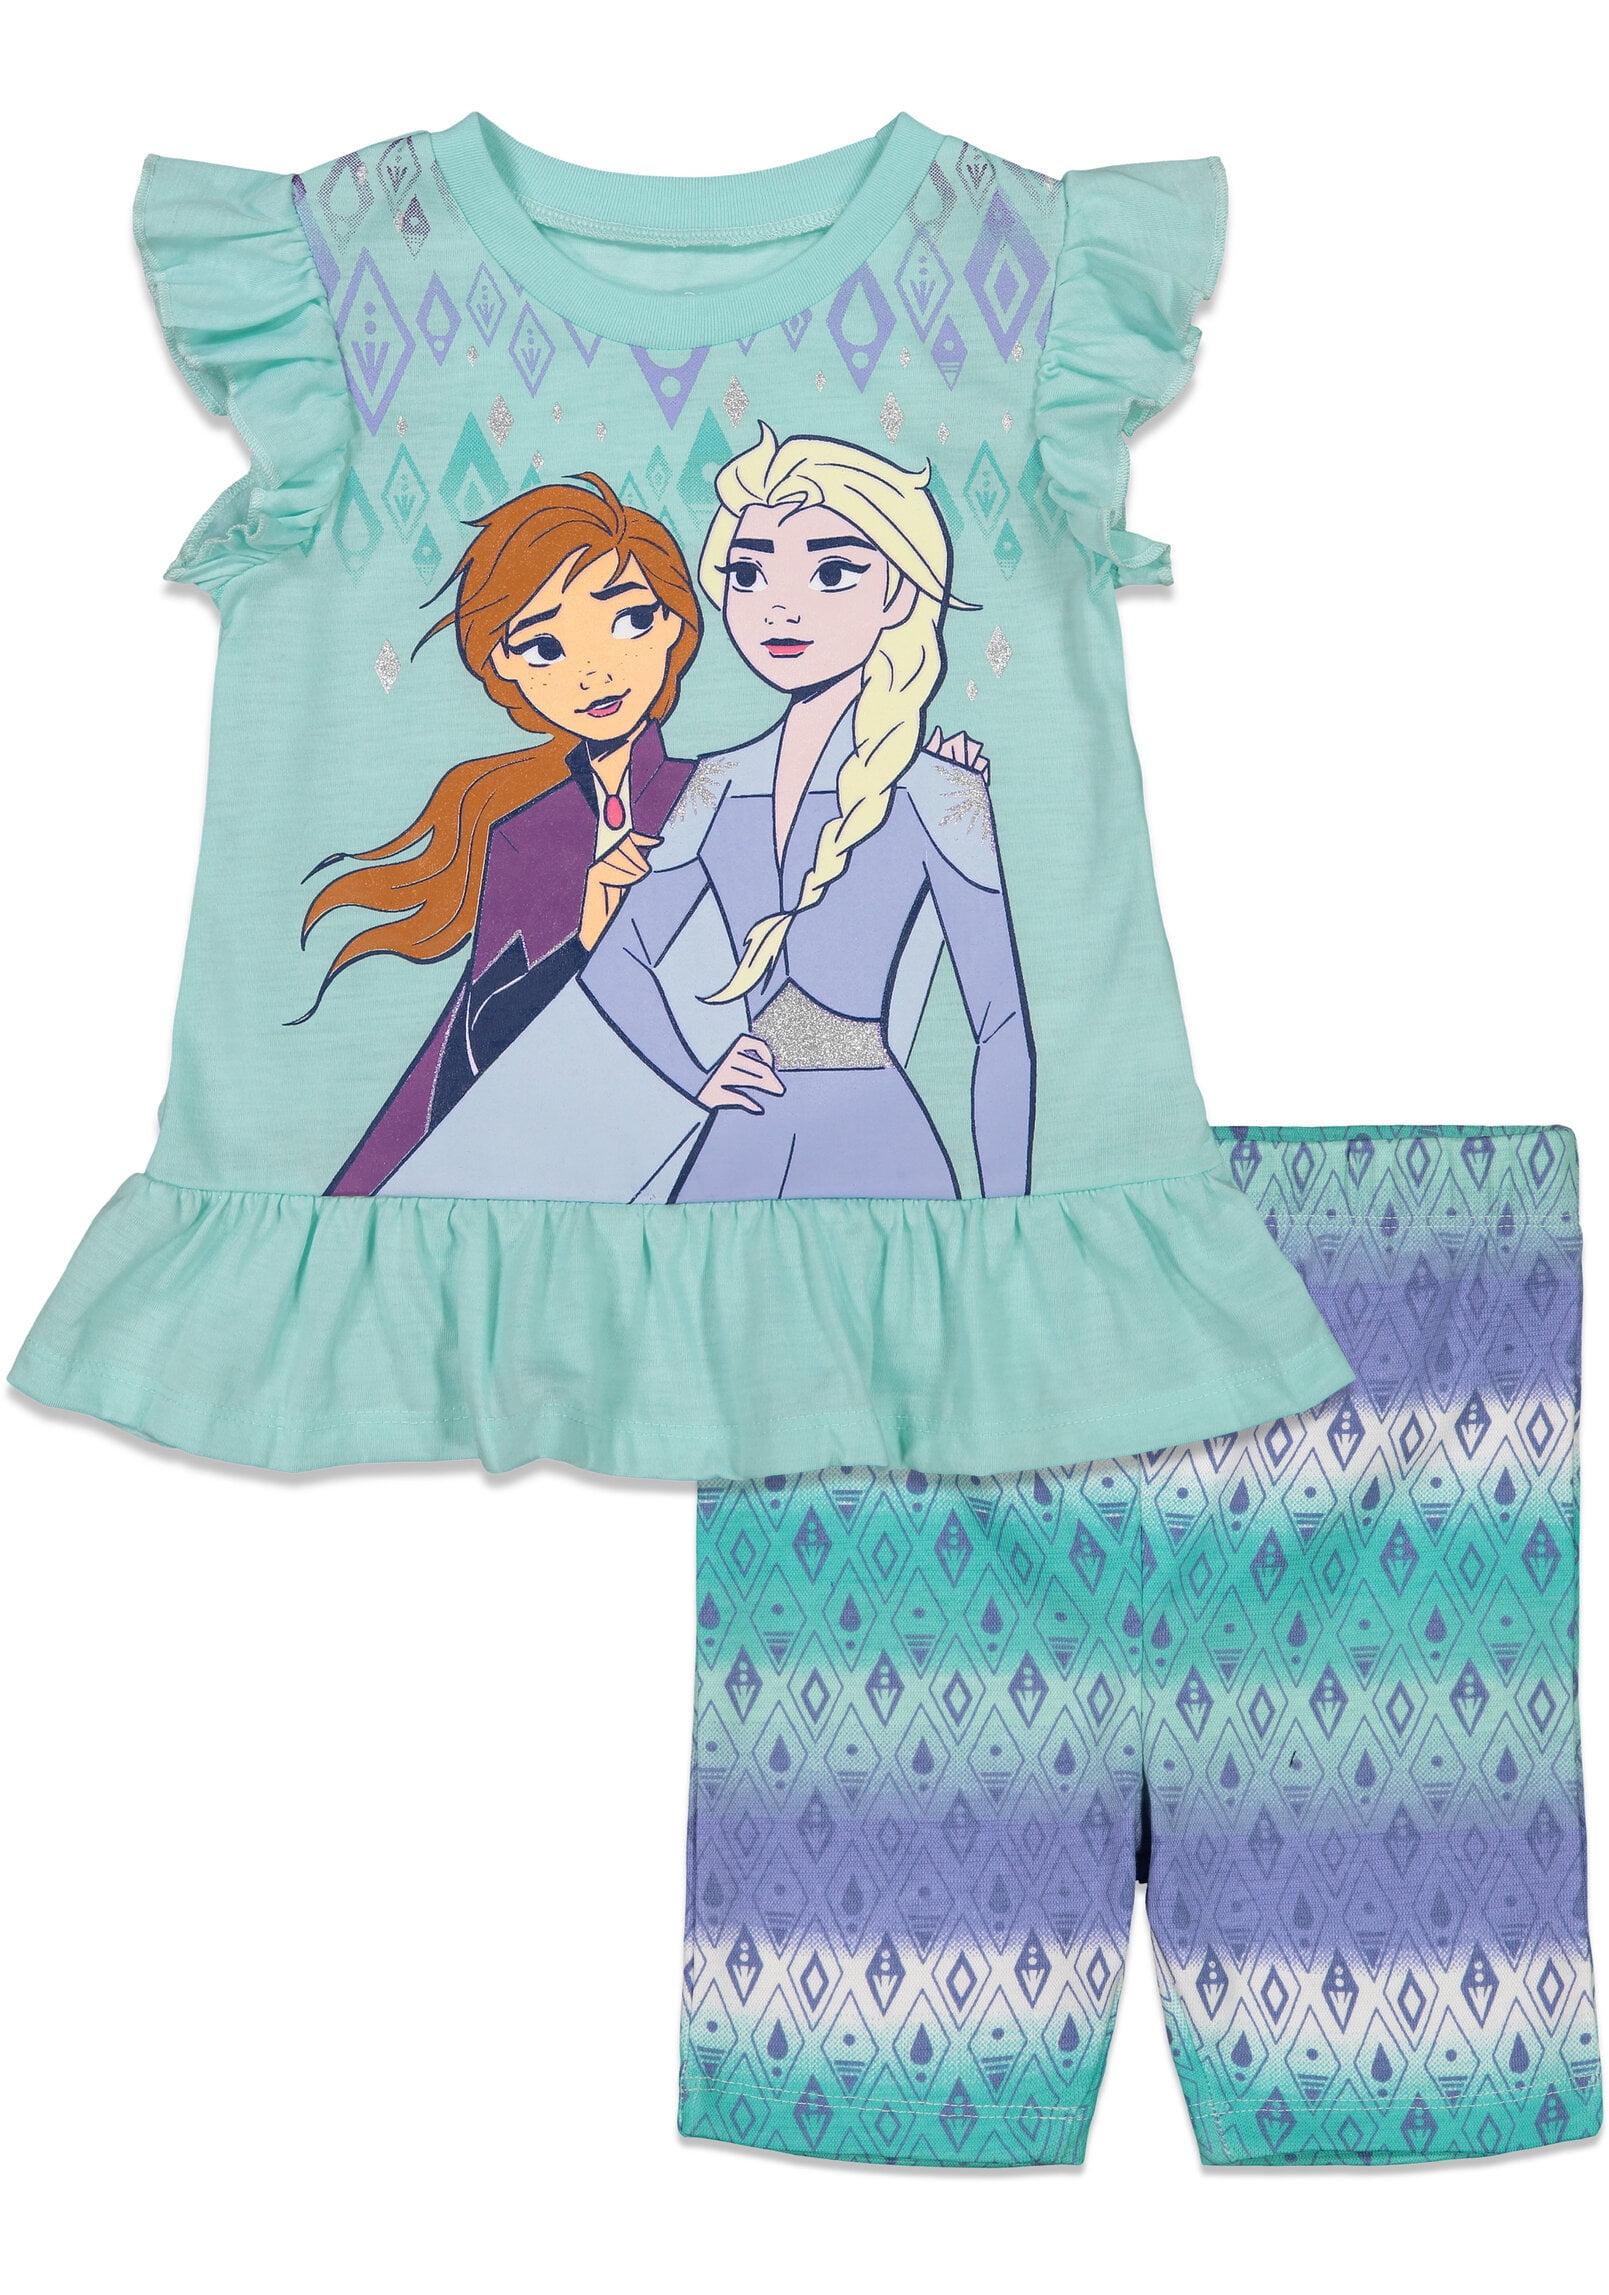 Disney Frozen Elsa Toddler Girls Pullover French Terry Sweatshirt